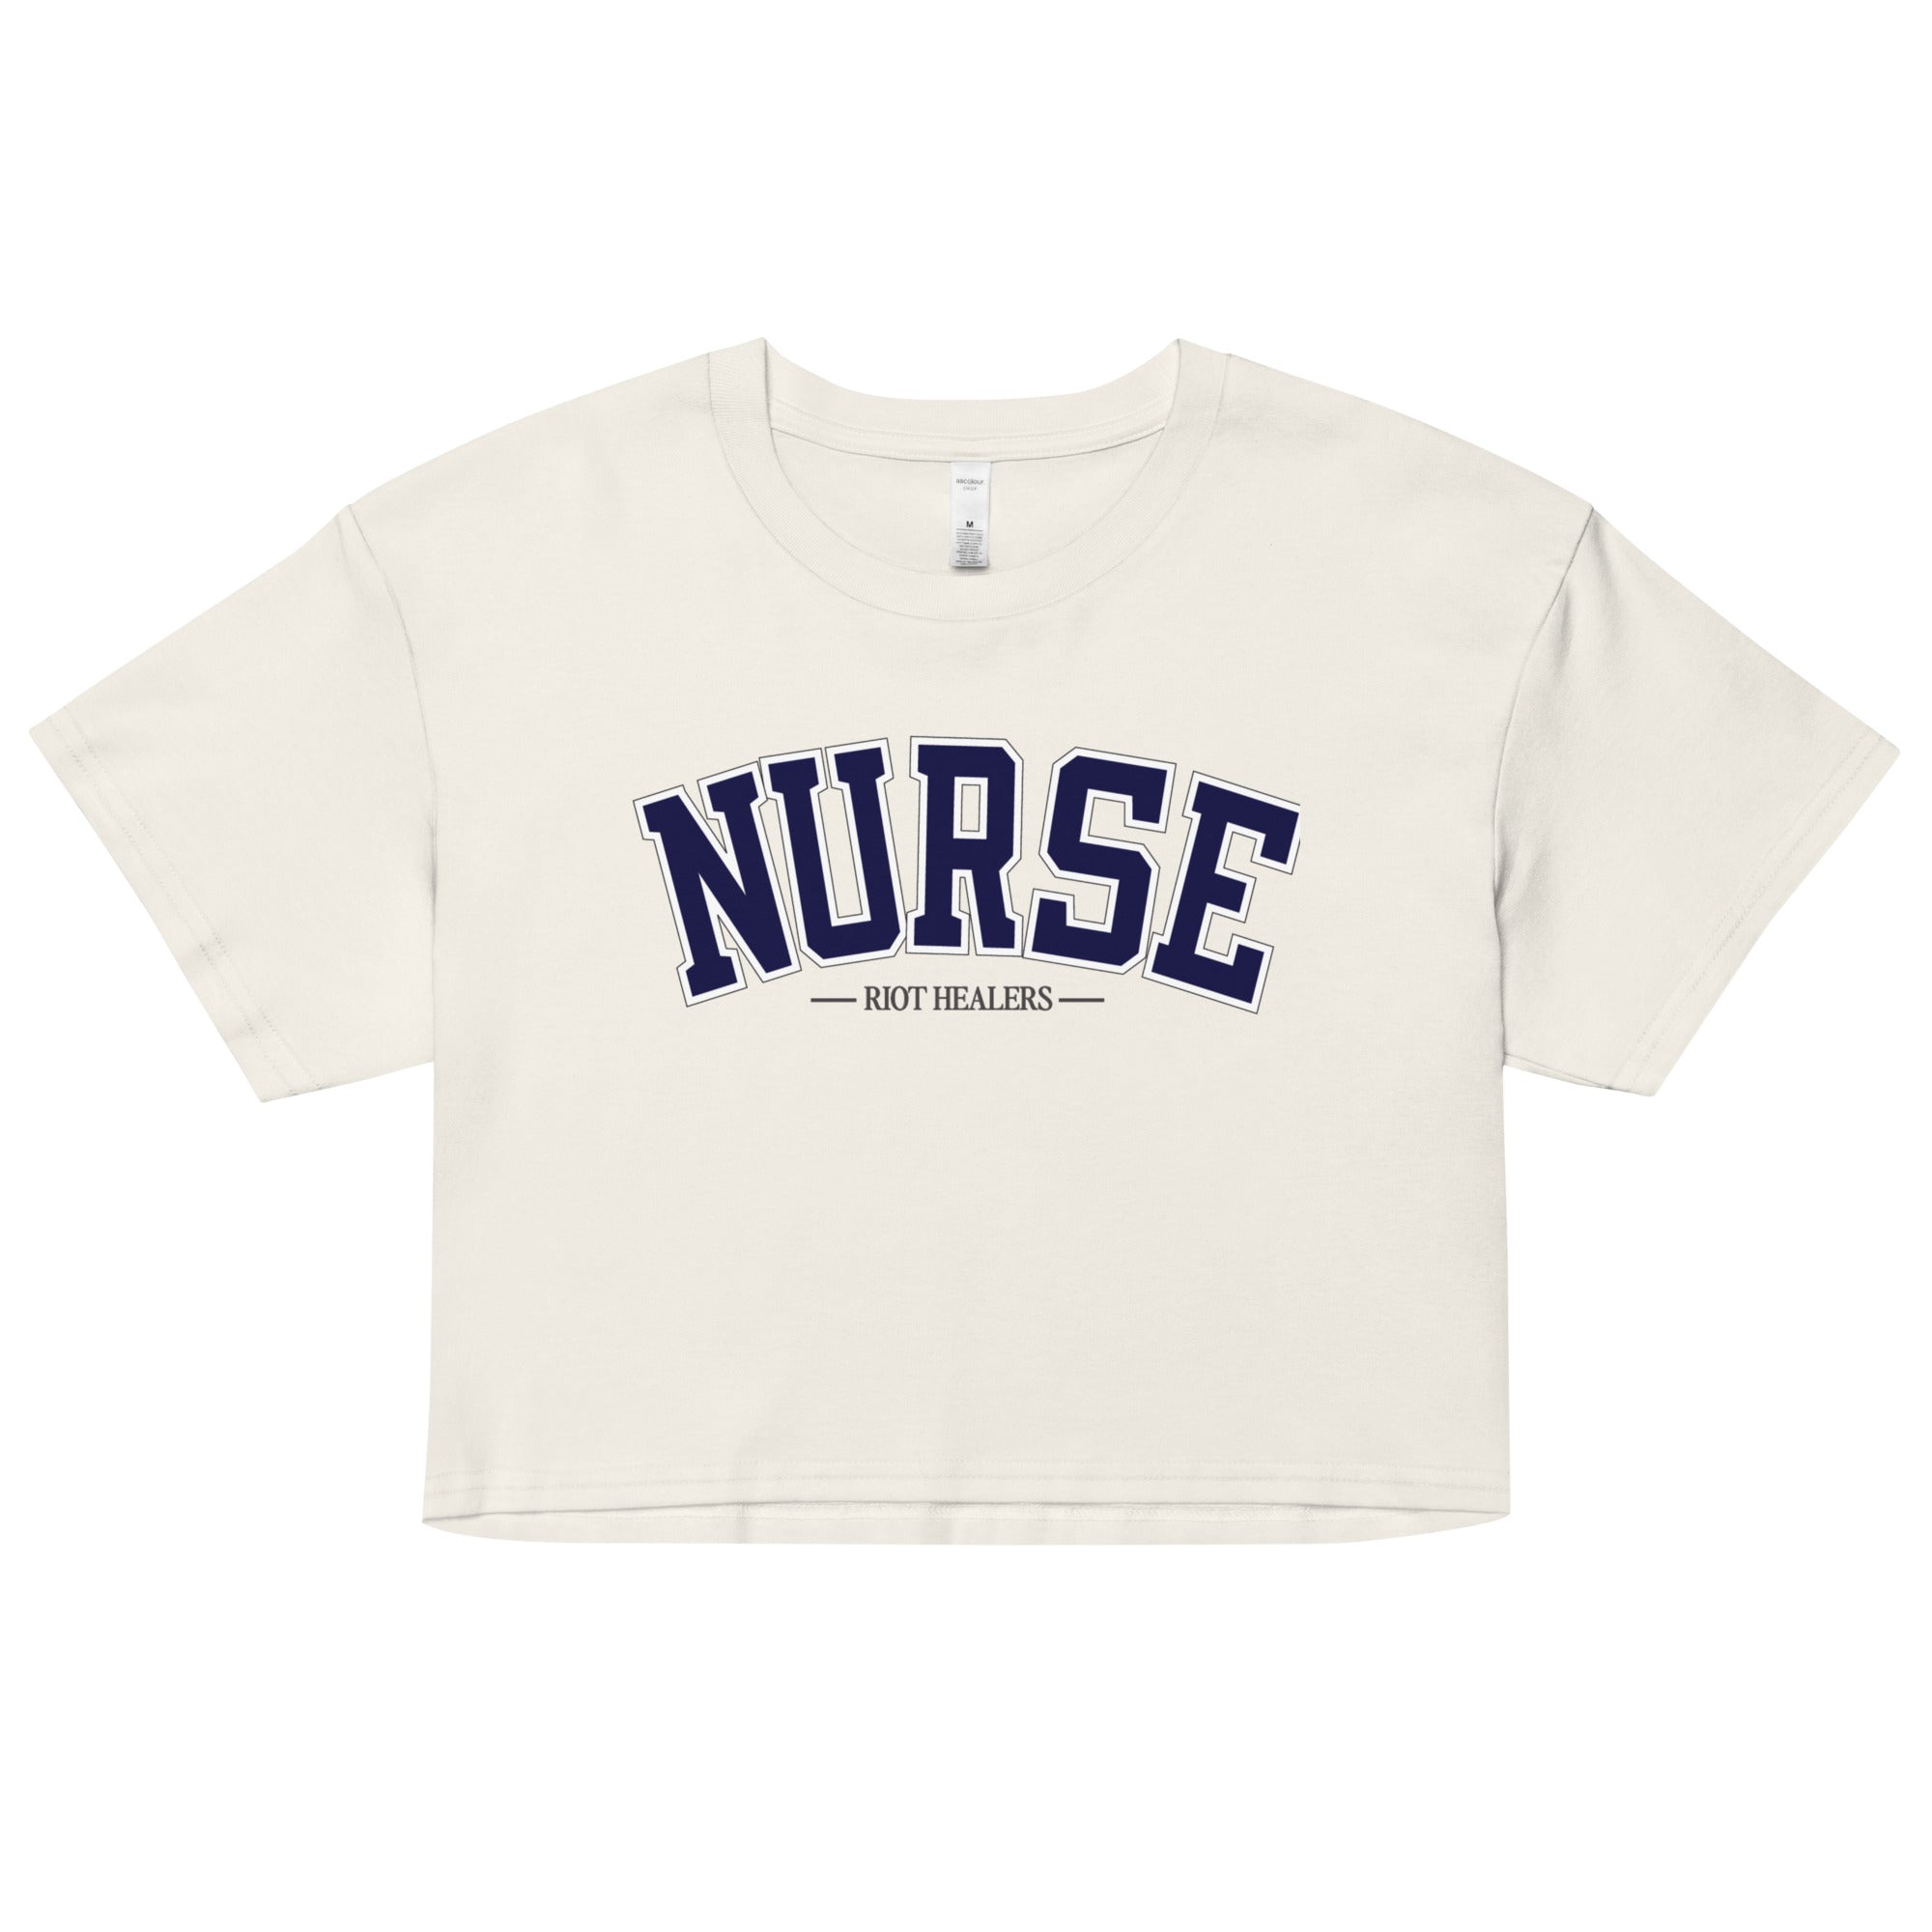 Nurse Collegiate Crop - Navy